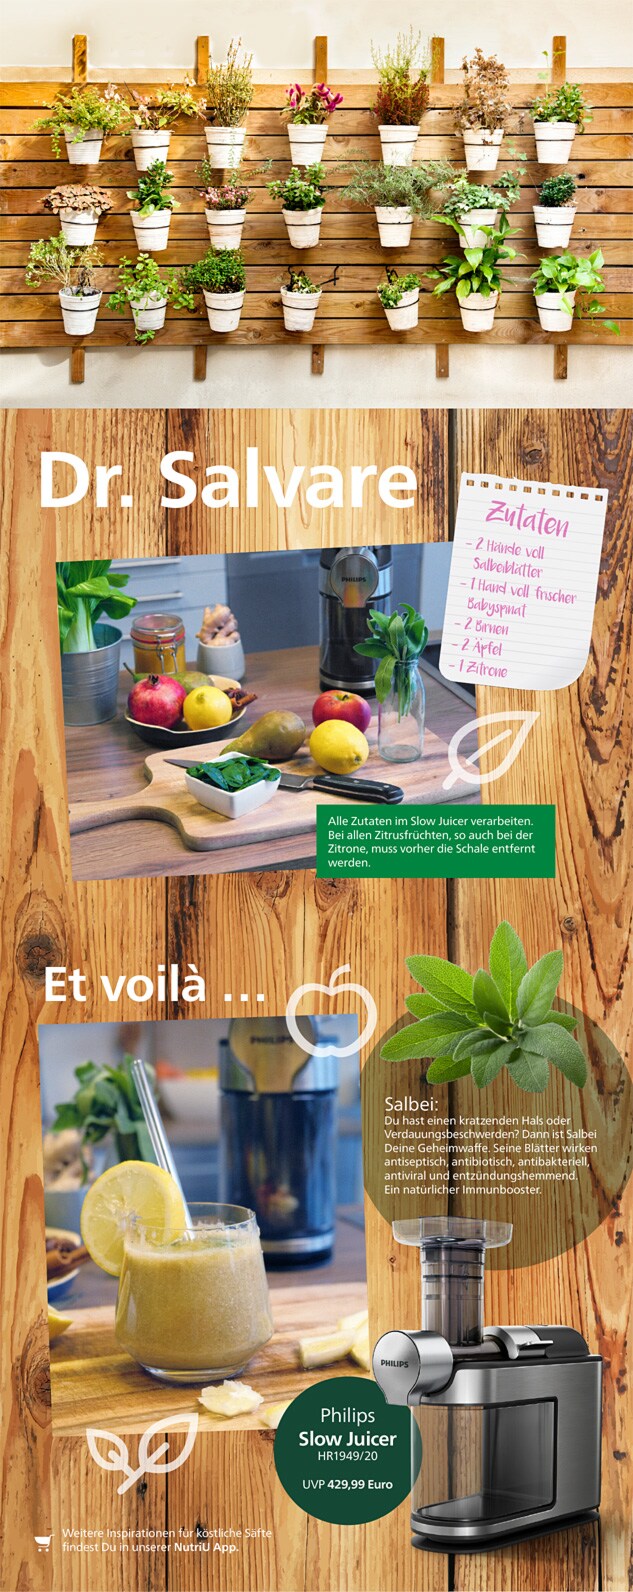 Philips DA Themensheet - Dr. Salvare download pdf